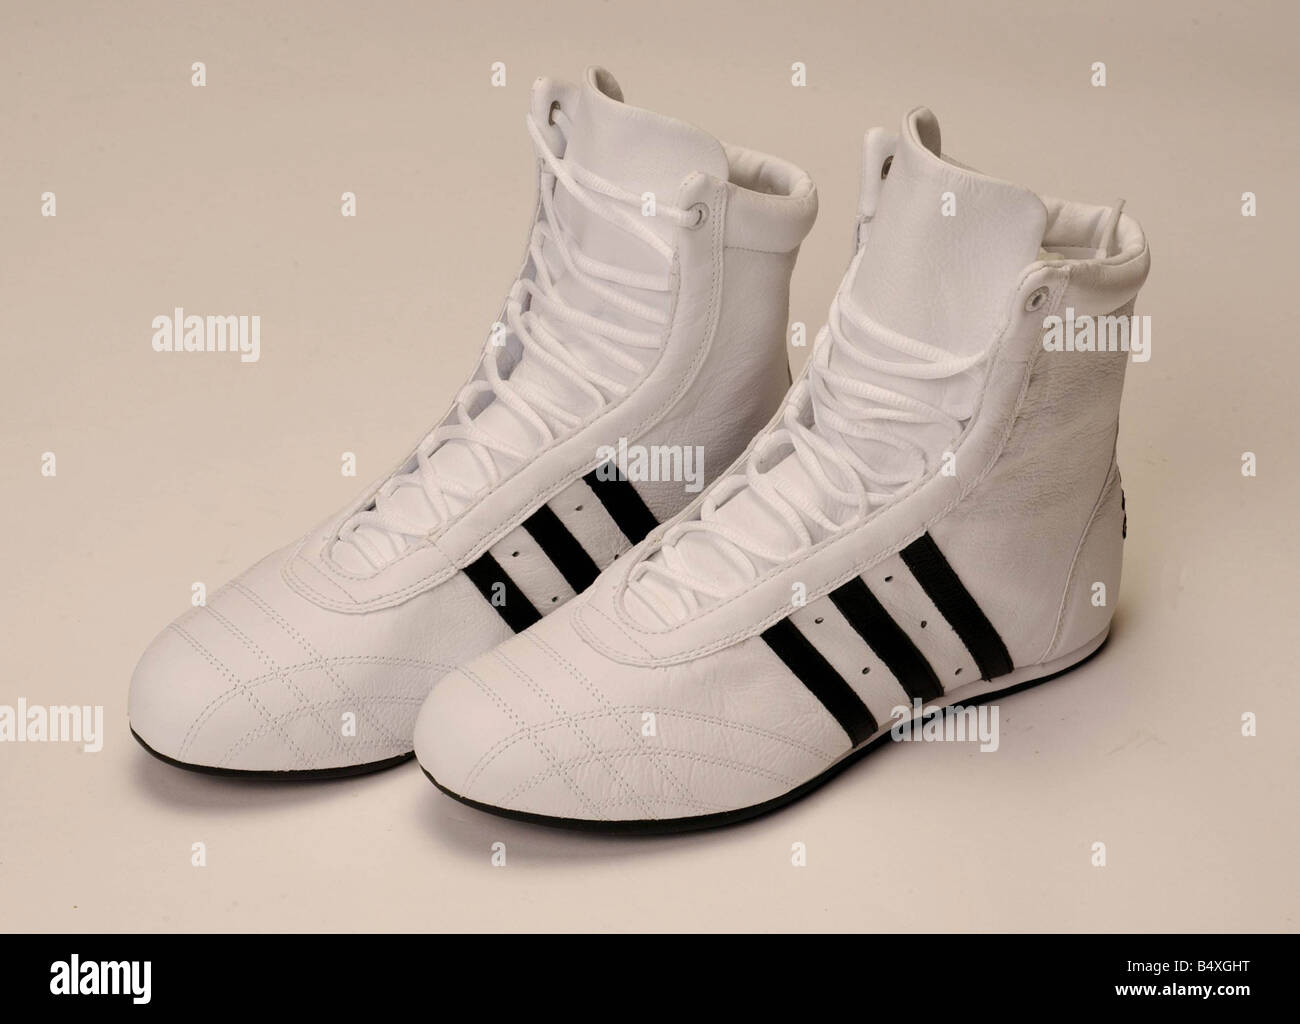 adidas boxer boots